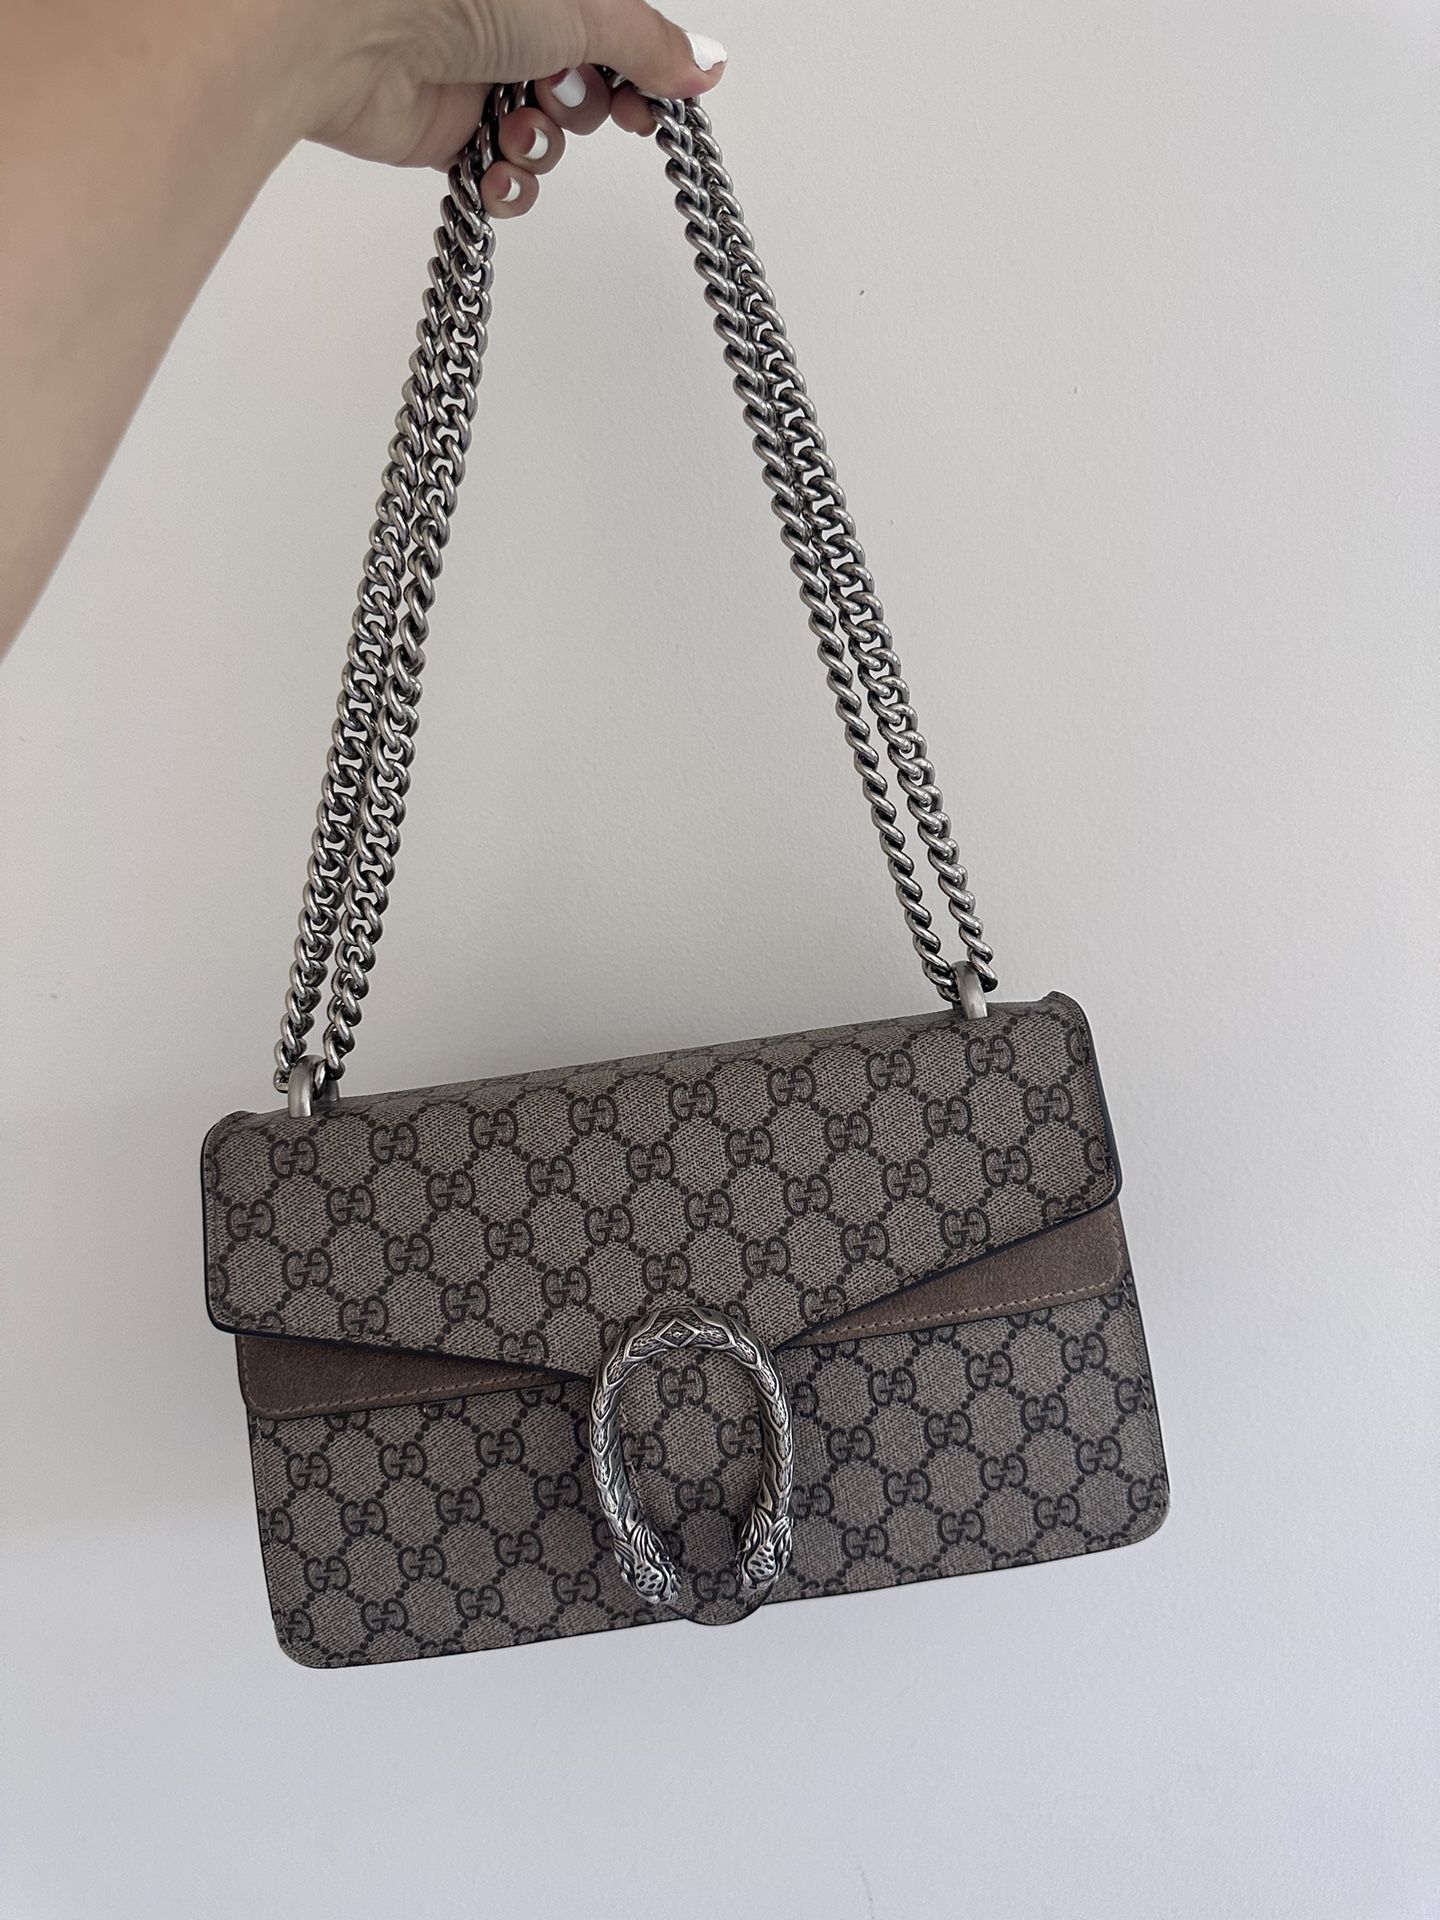 Gucci GG Supreme Monogram Small Dionysus Shoulder Bag Taupe